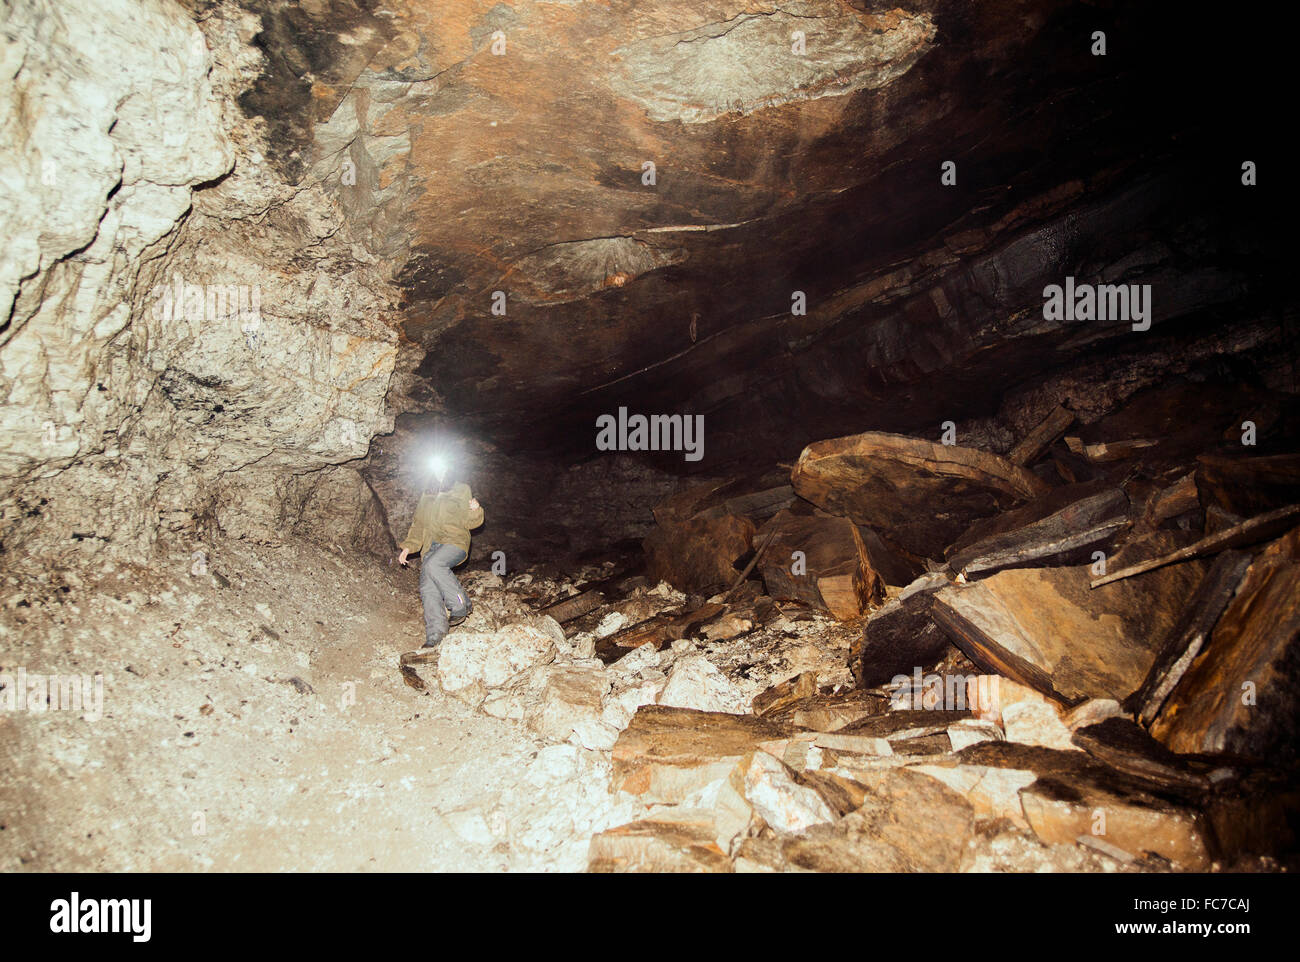 Caucasian hiker wearing headlamp in cave Stock Photo